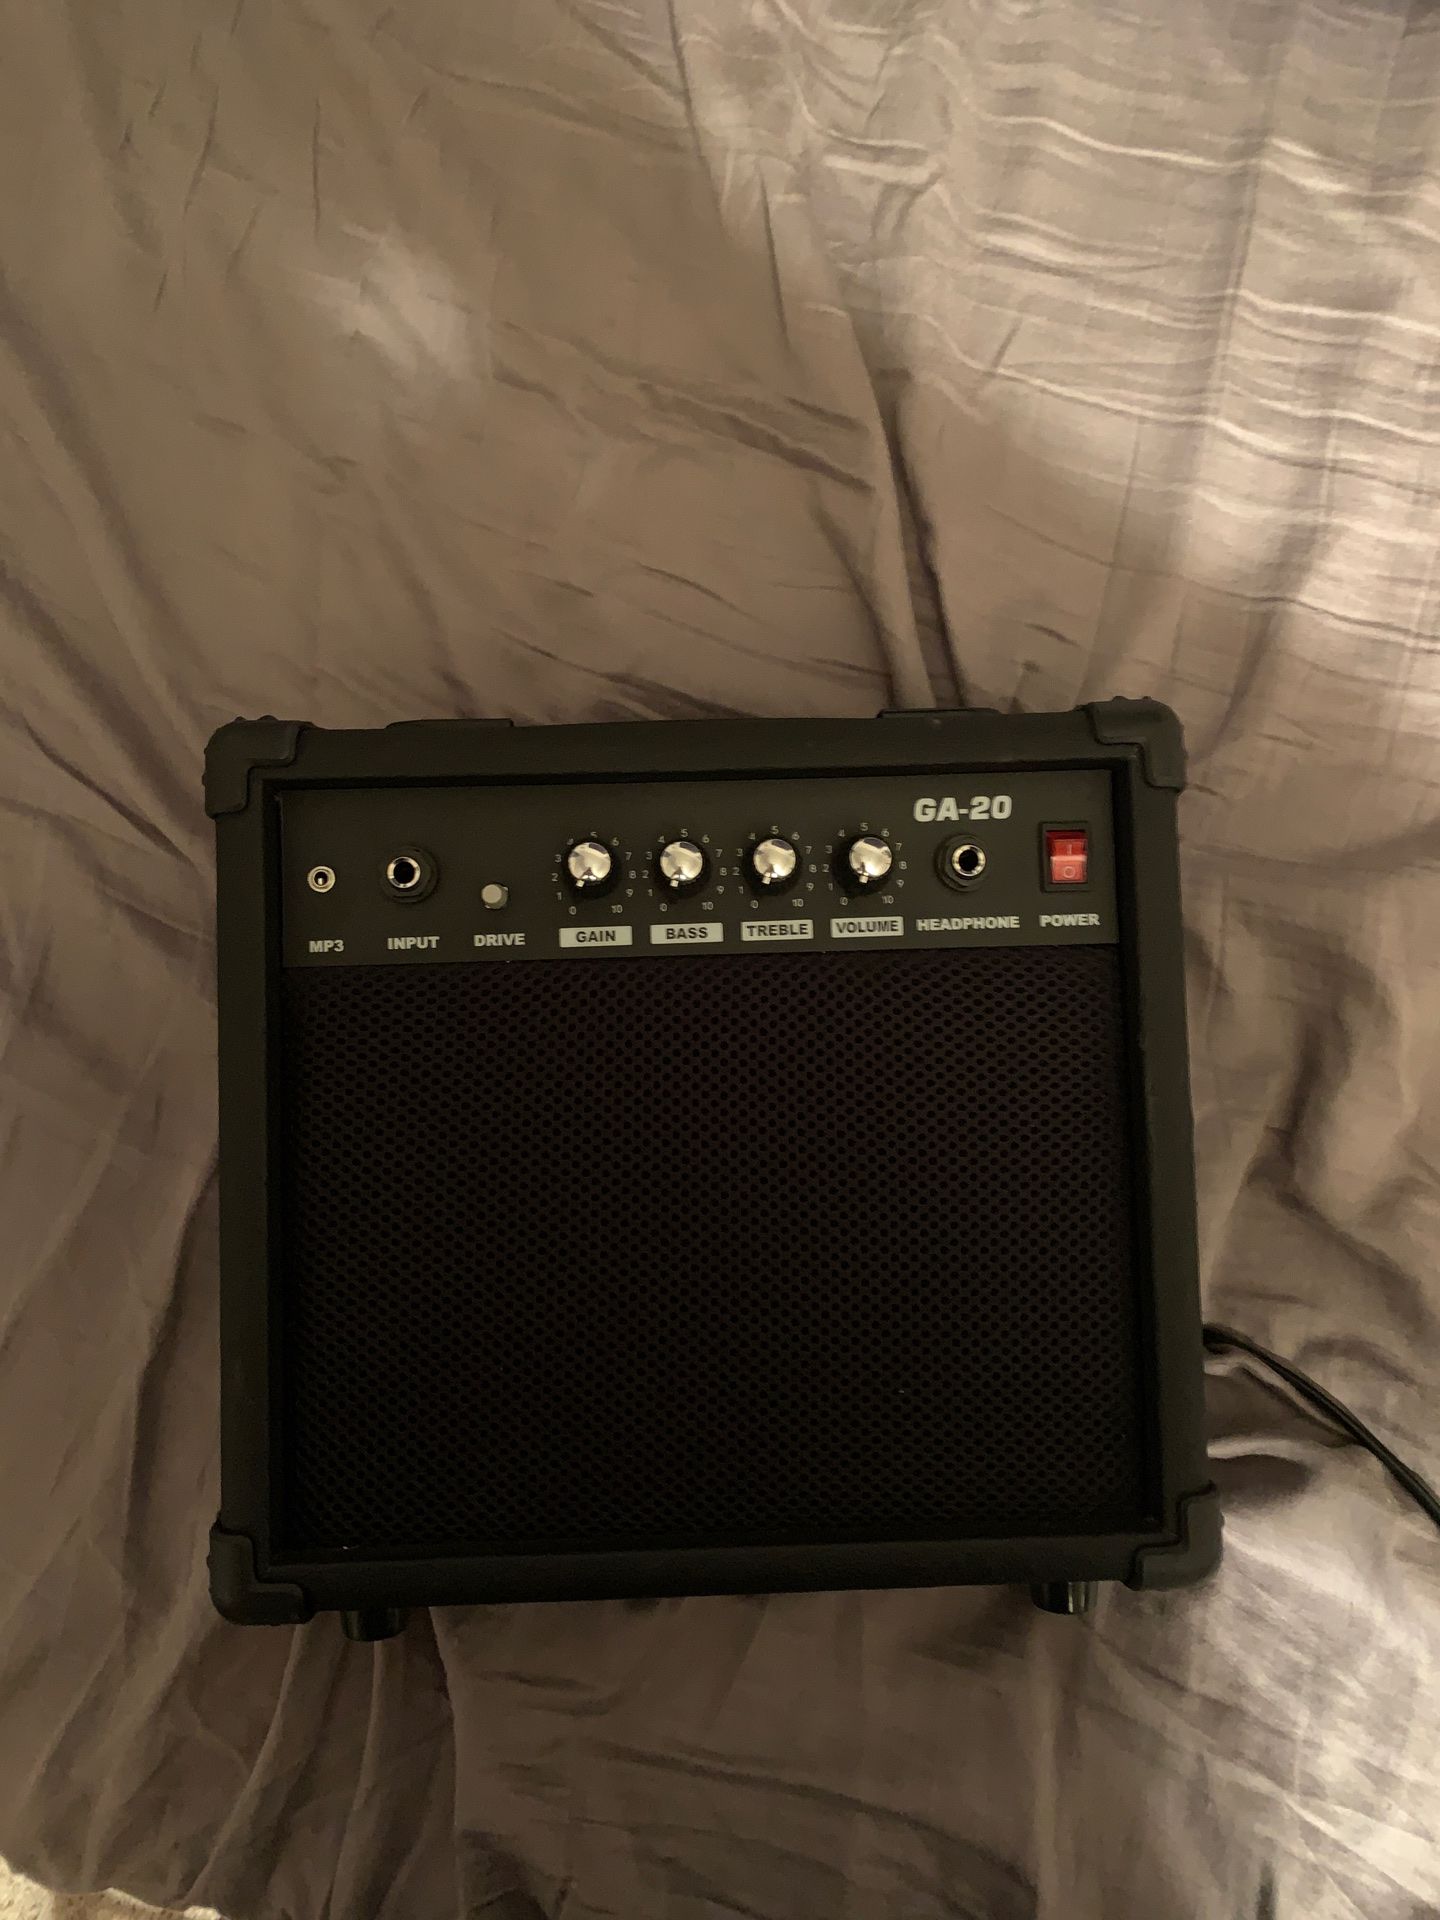 GA-20 amplifier